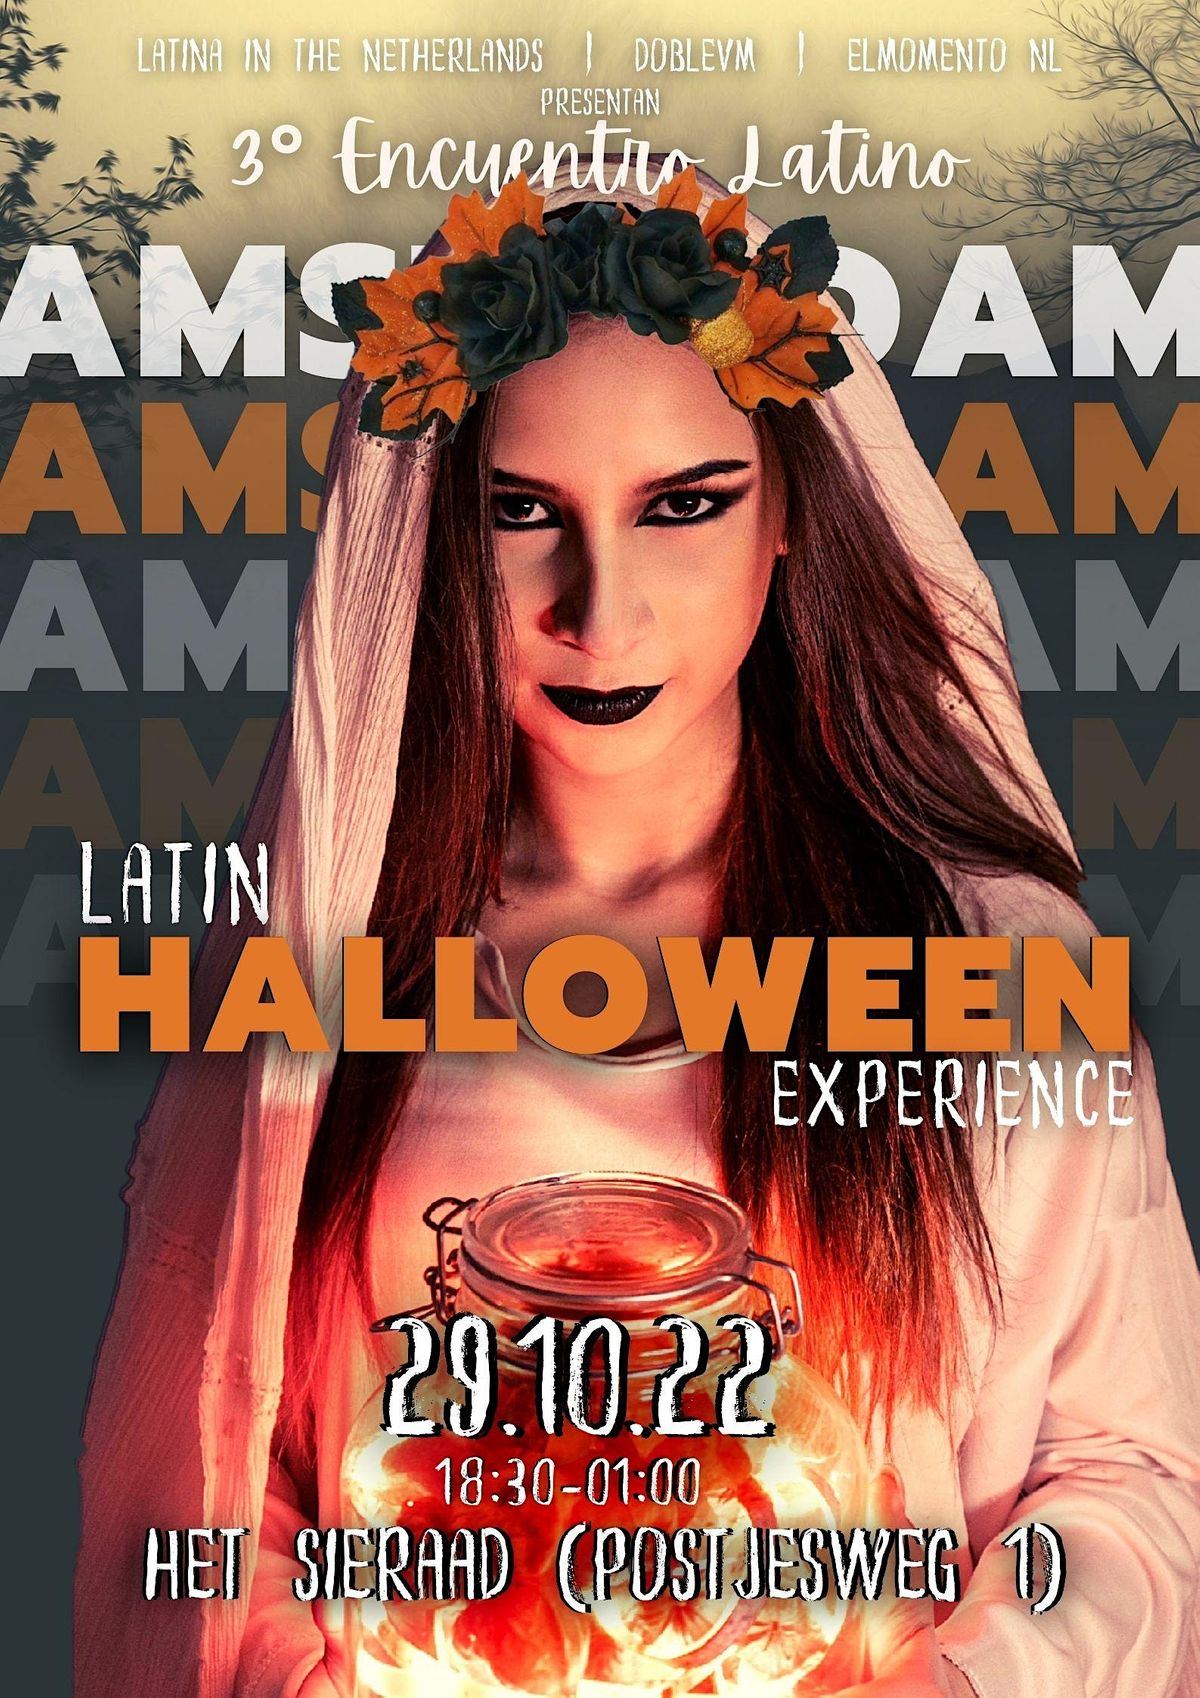 Latin Halloween Experience - 3er Encuentro Latino